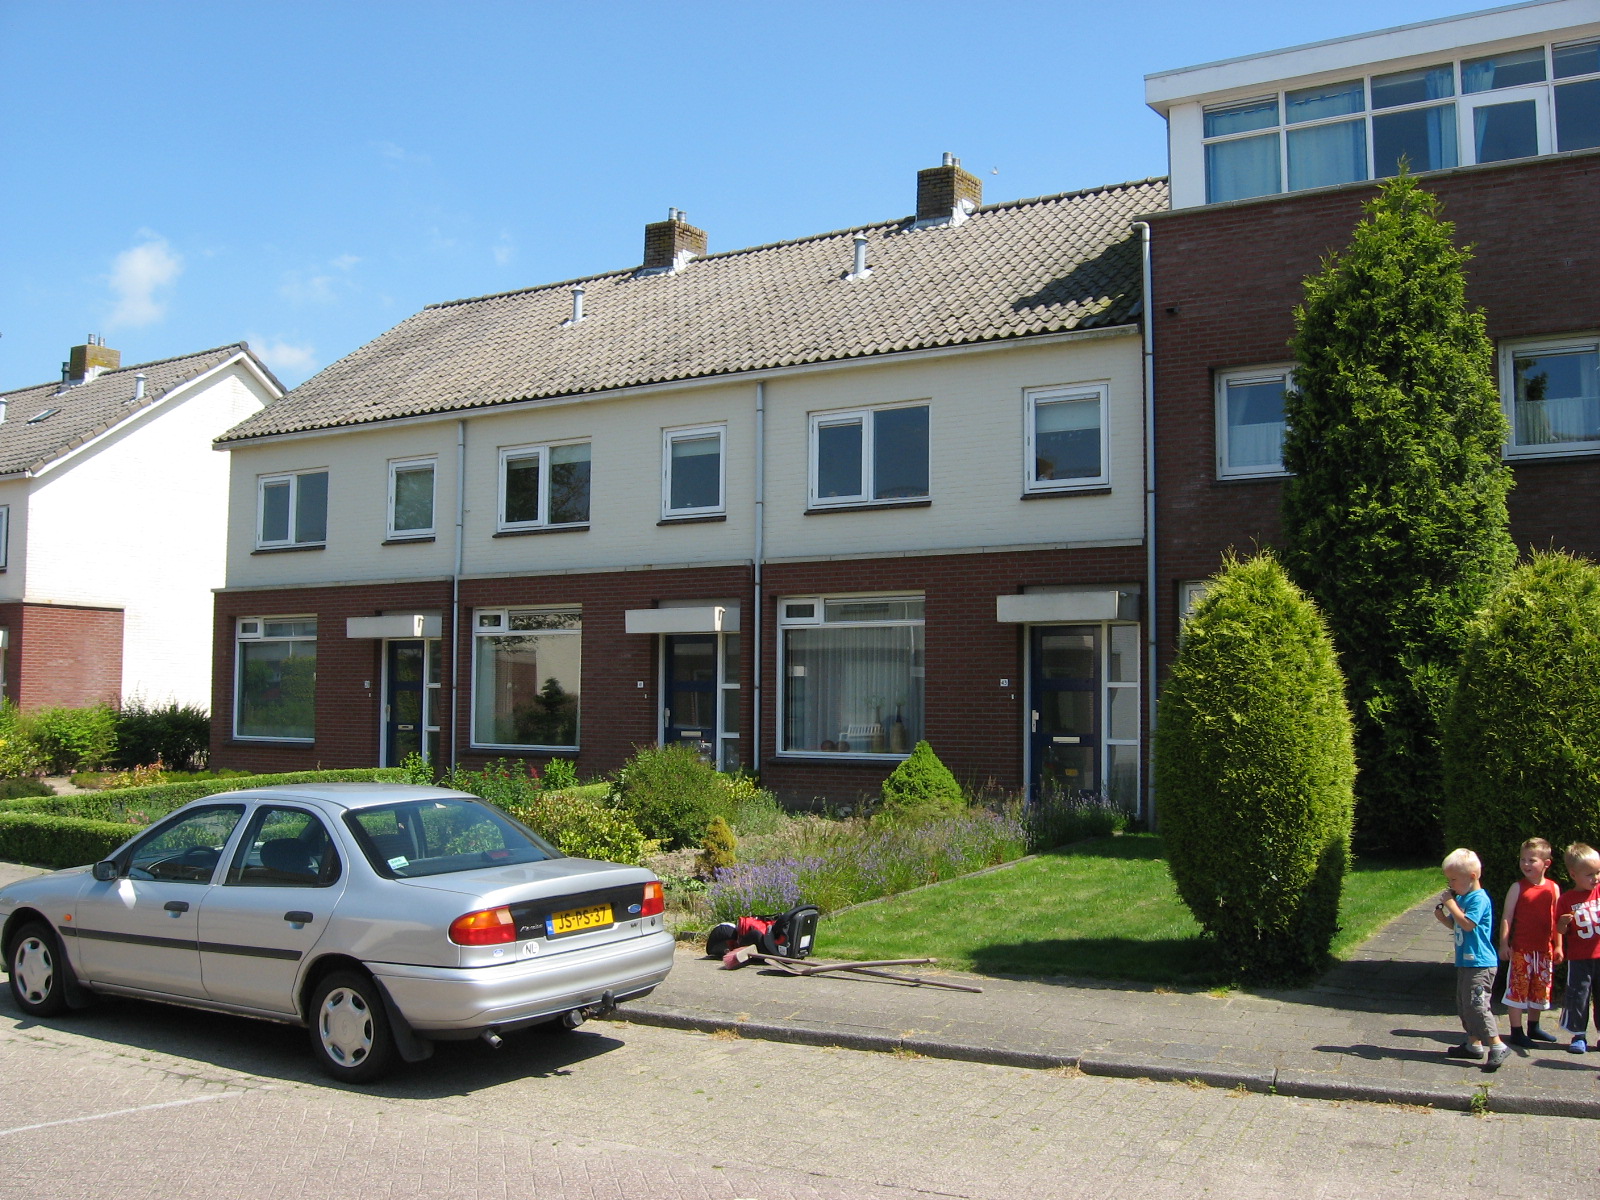 Conincksweg 43, 8341 RG Steenwijkerwold, Nederland